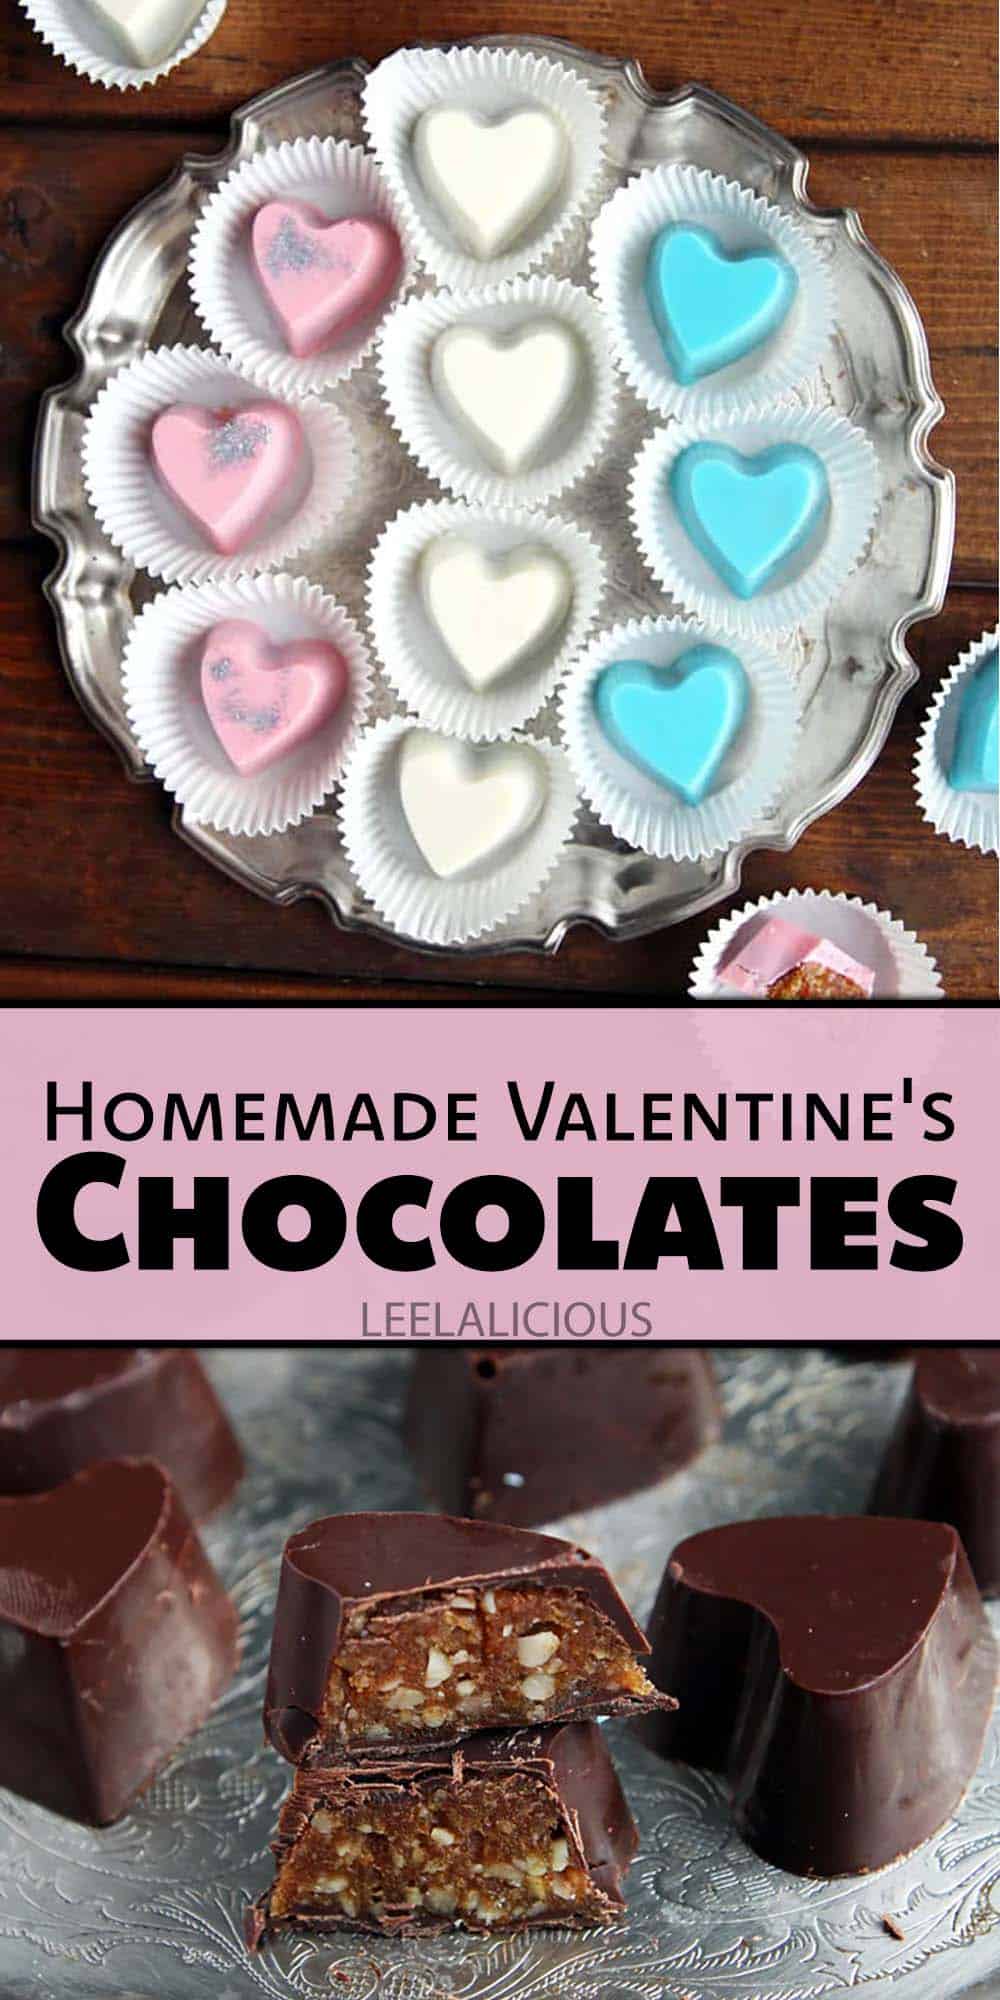 Homemade Valentine's Chocolates